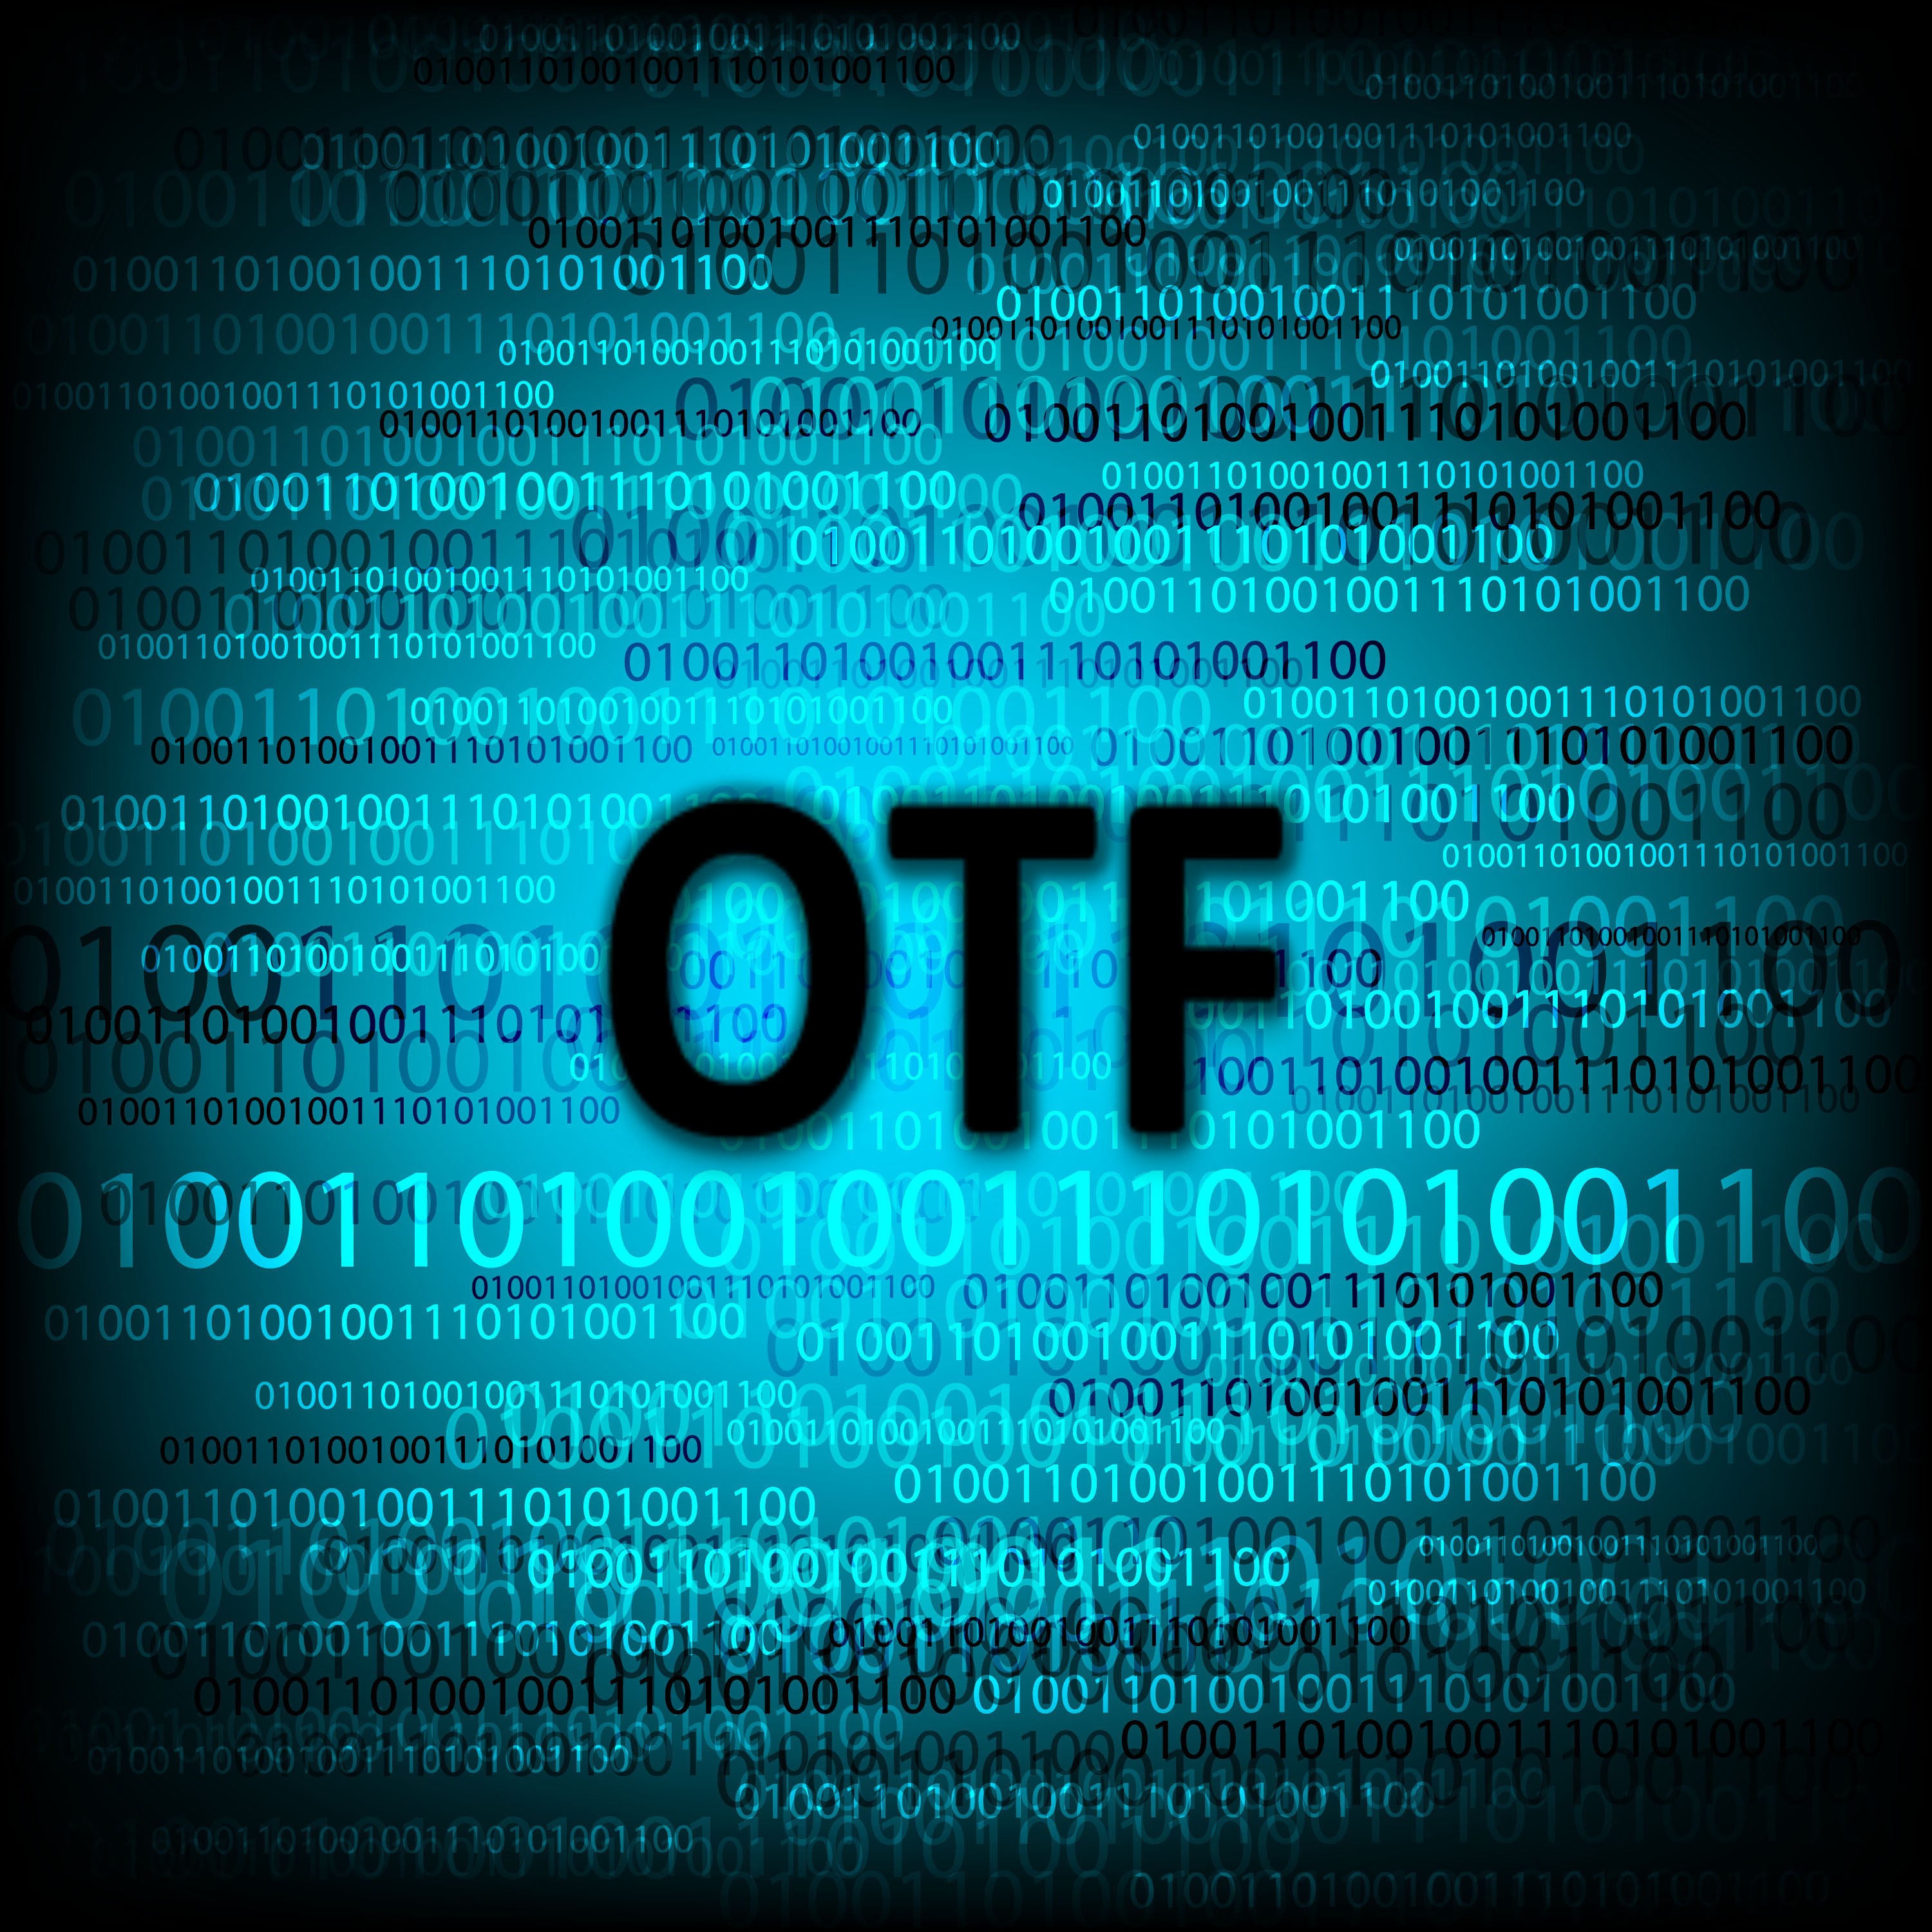 otf-frontend/client/src/assets/images/NetworkLogo.jpg